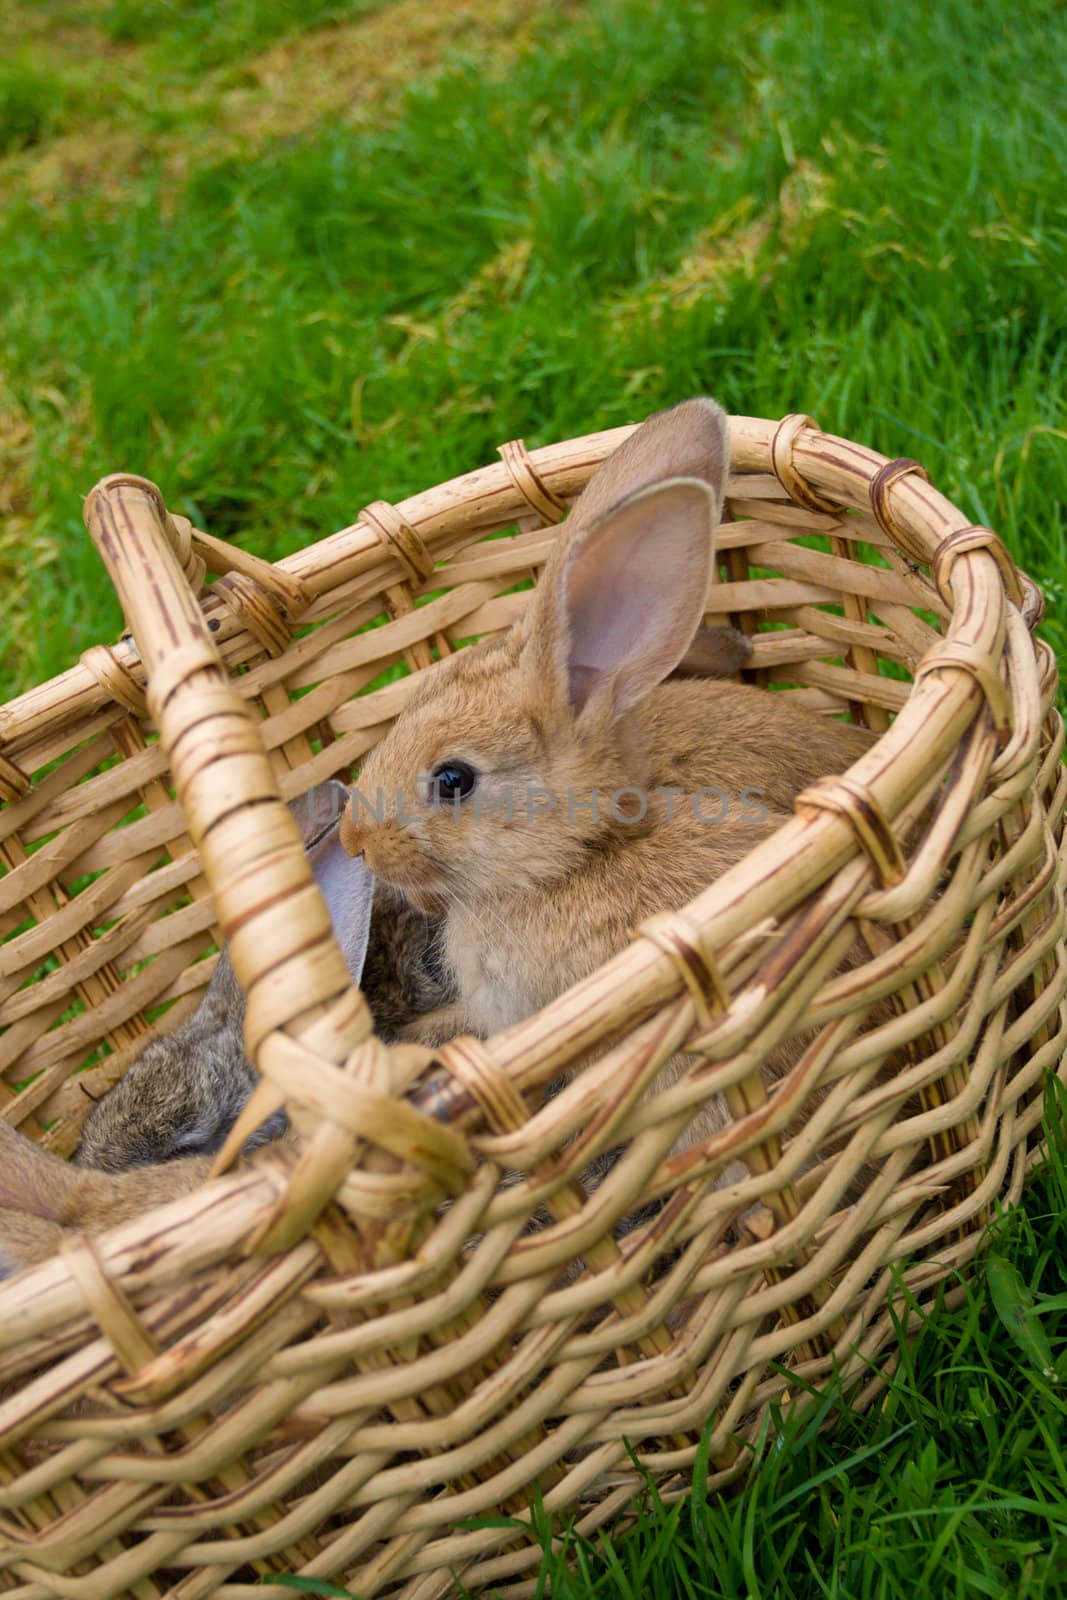 bunnies in basket on green grass background